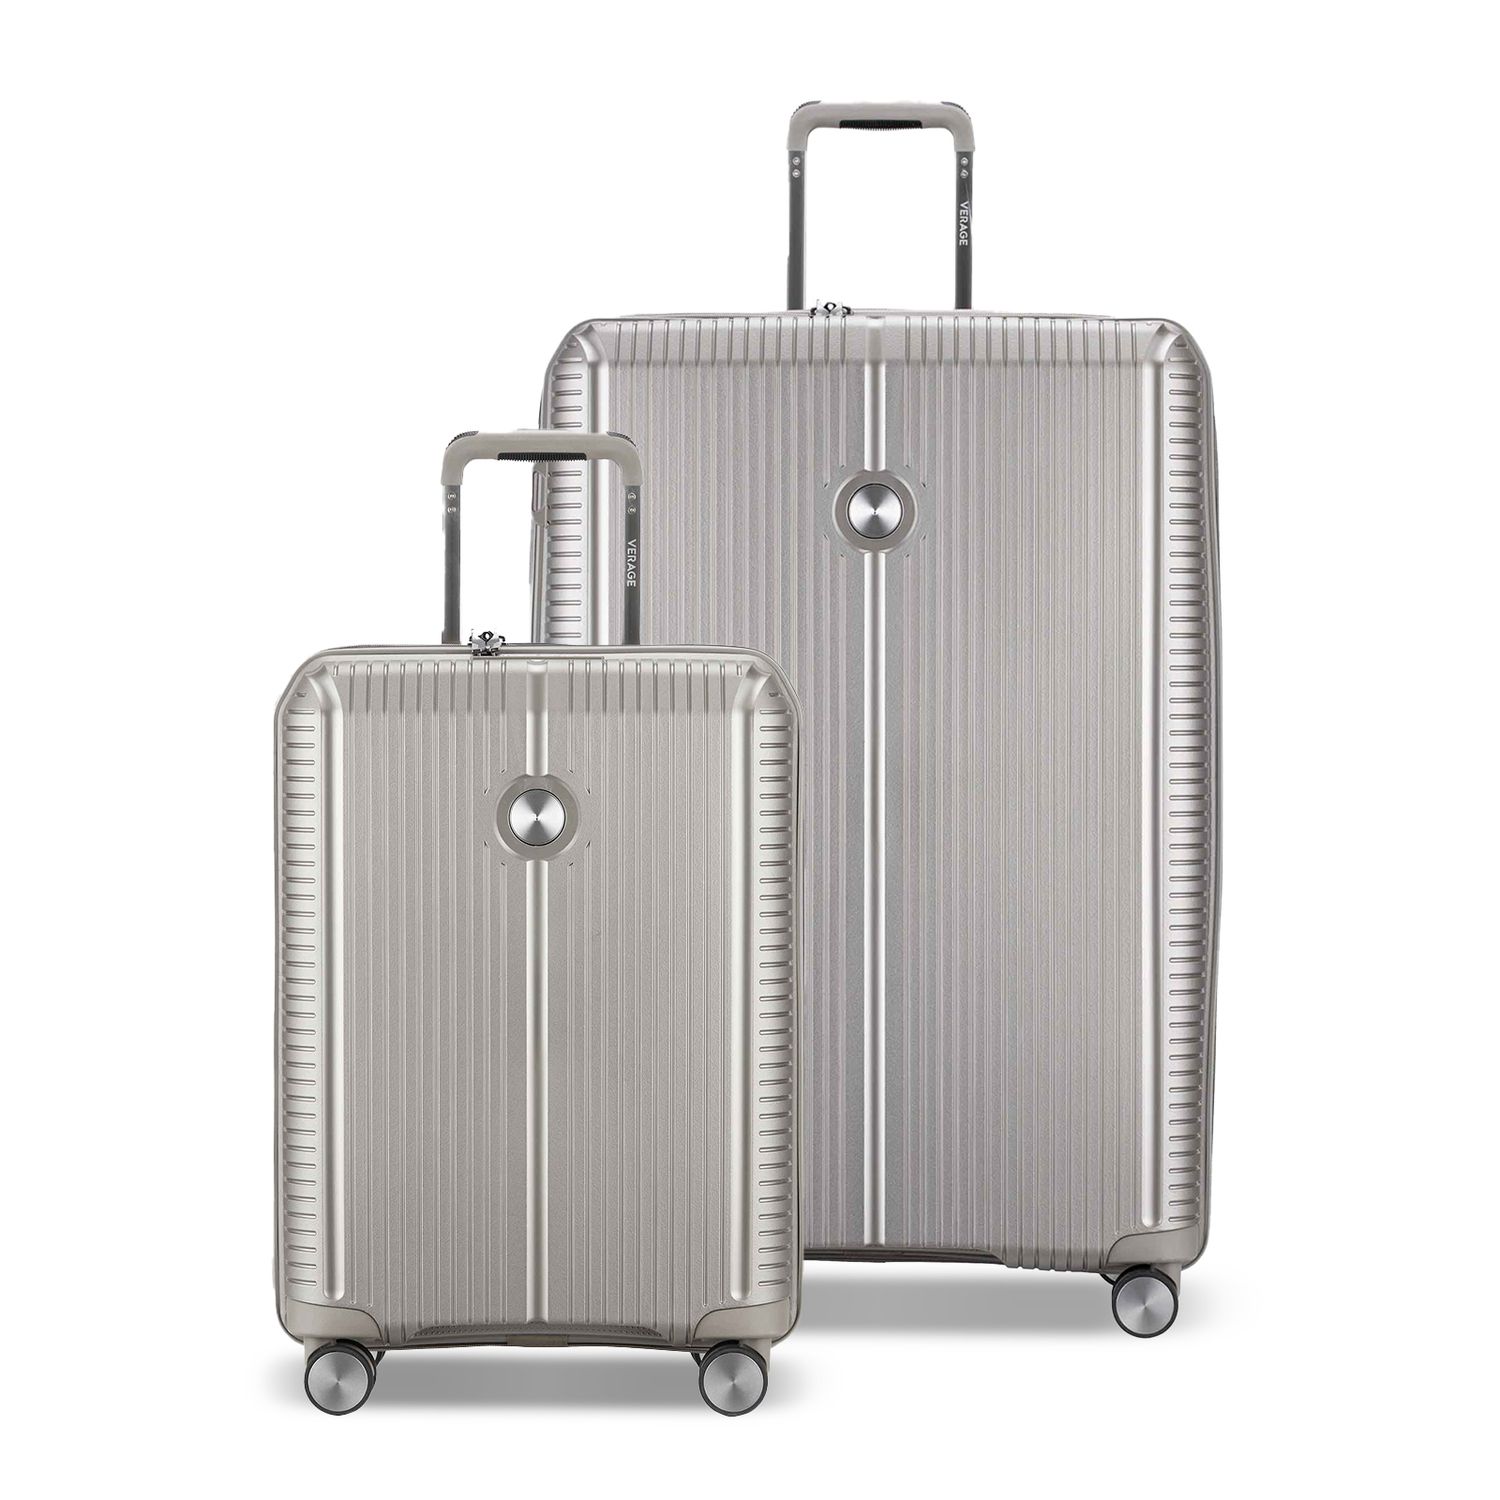 Silver luggage set